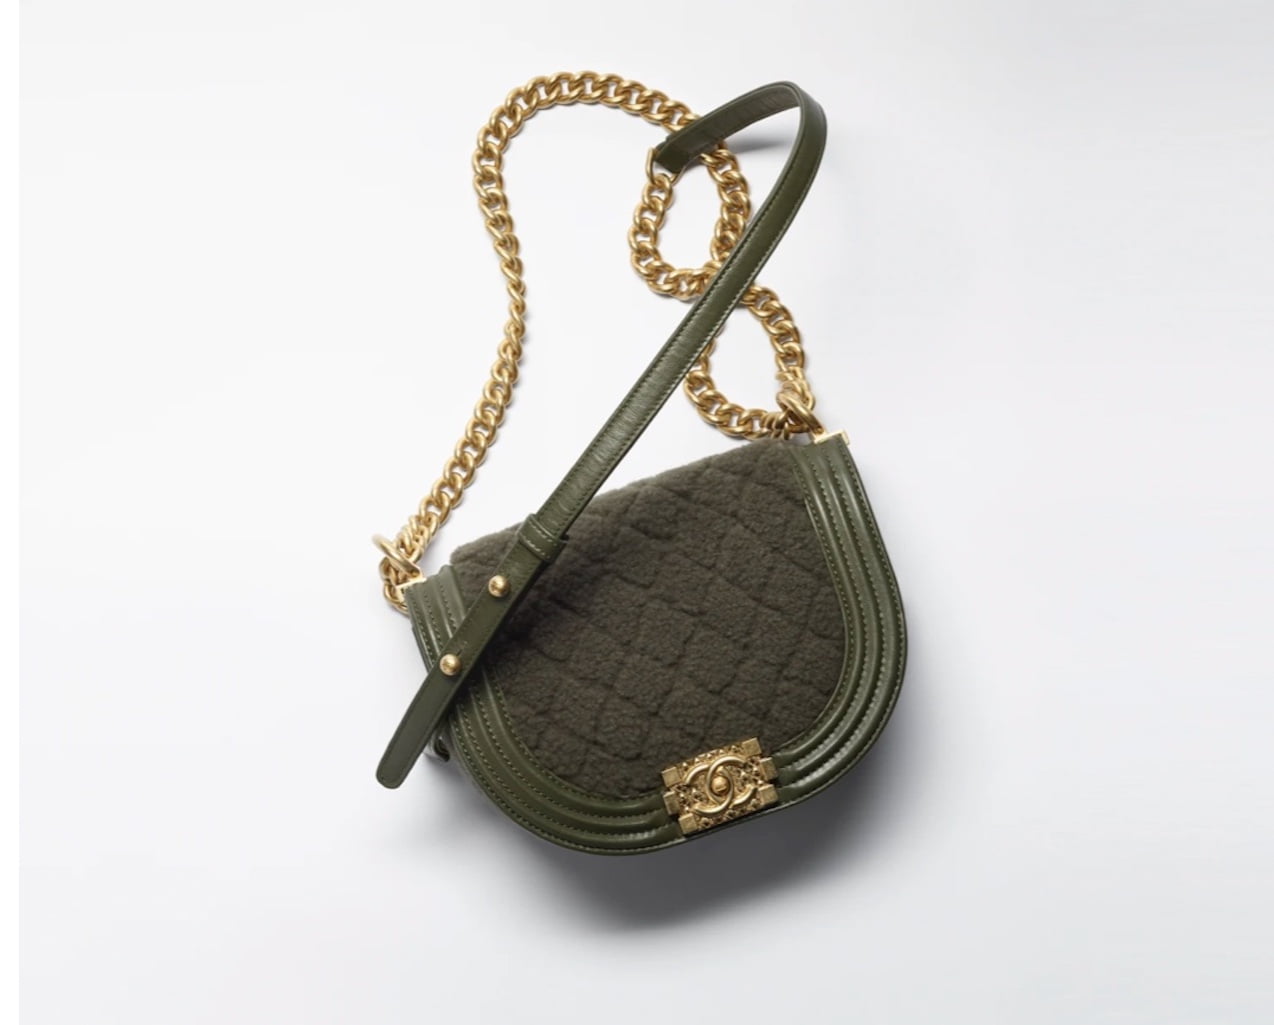 Basket Bags Match Chanel's Haute Couture Fall/Winter 23/24 - PurseBop